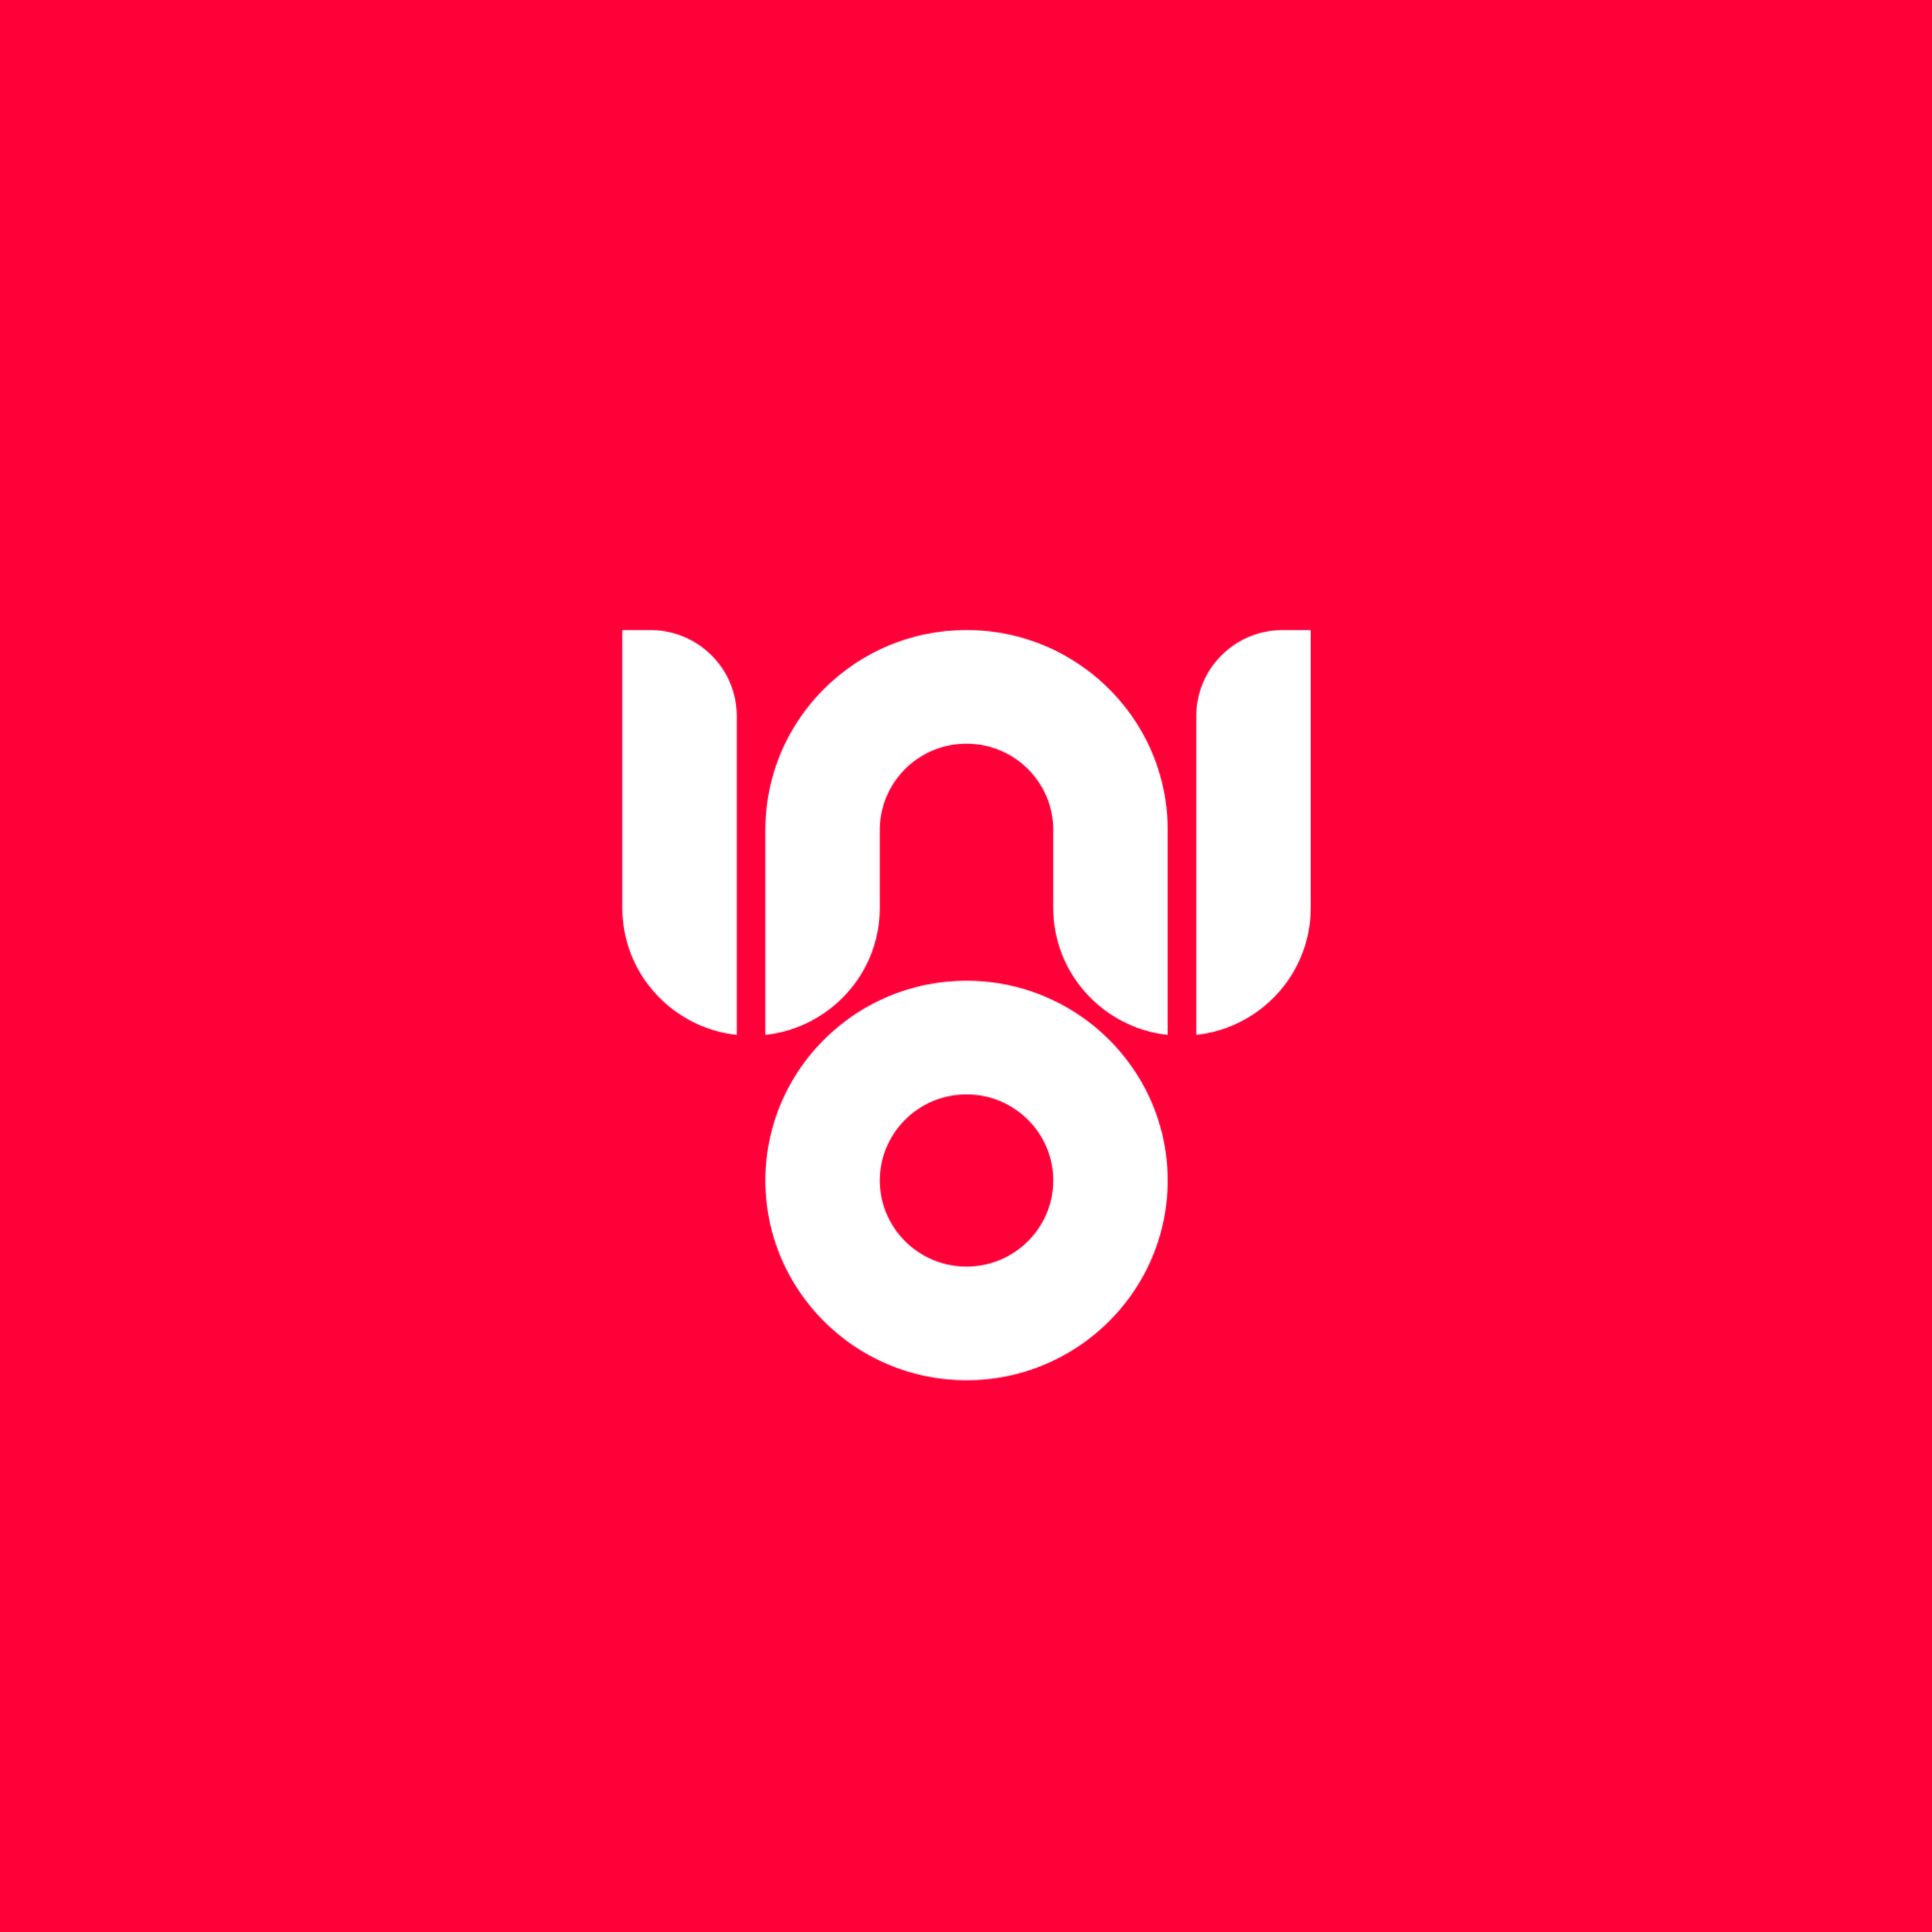 Логотип компании INOSTUDIO